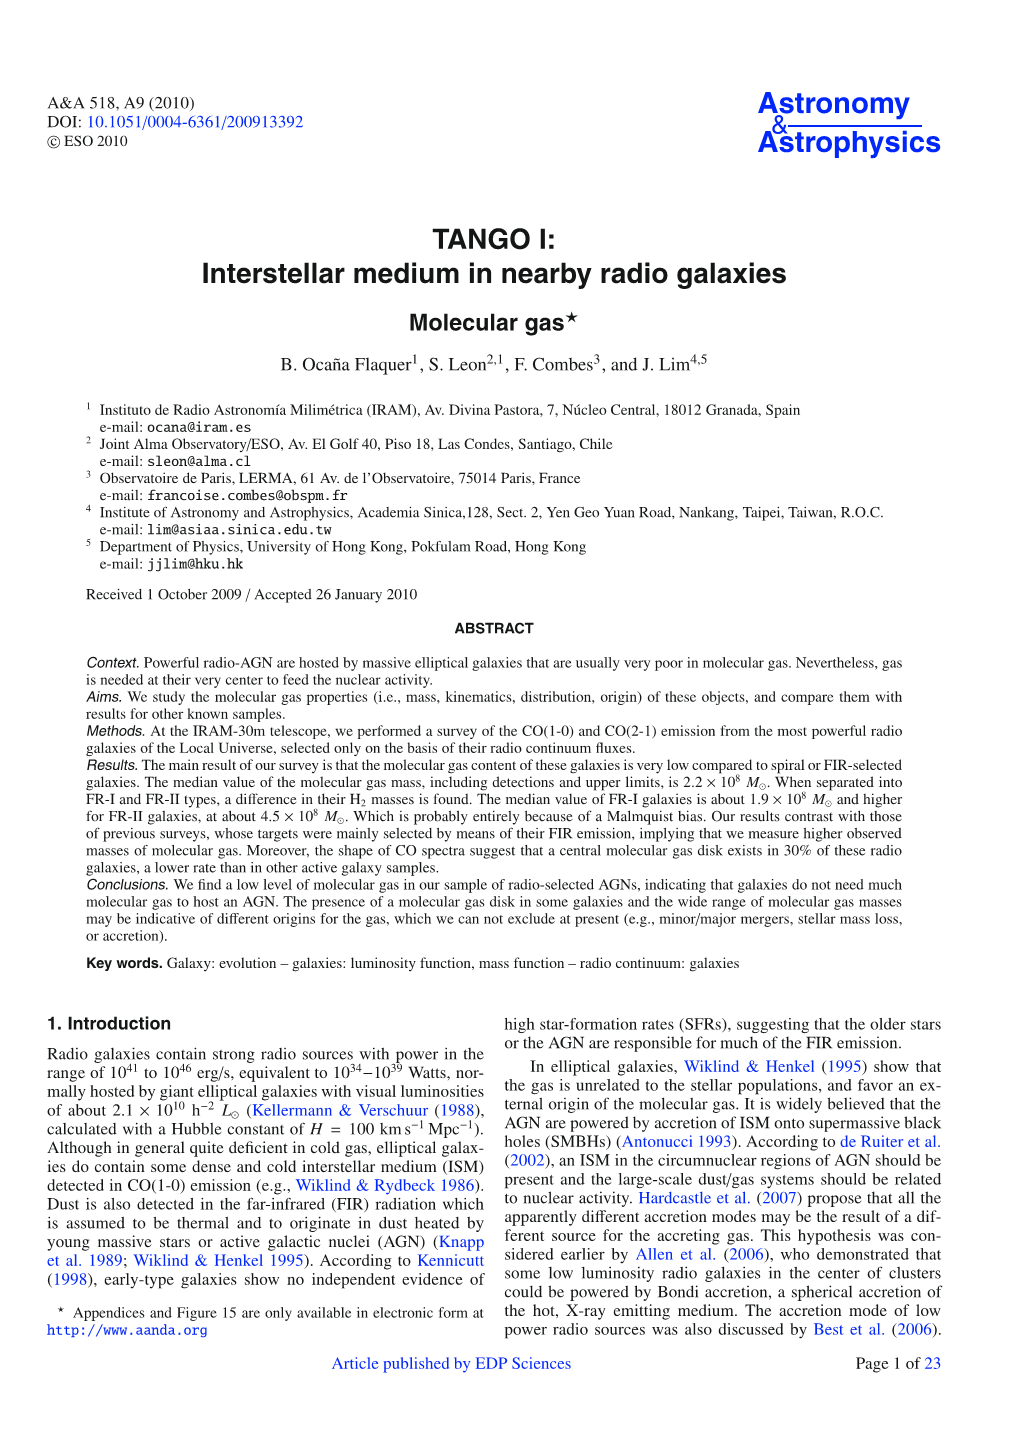 TANGO I: Interstellar Medium in Nearby Radio Galaxies Molecular Gas